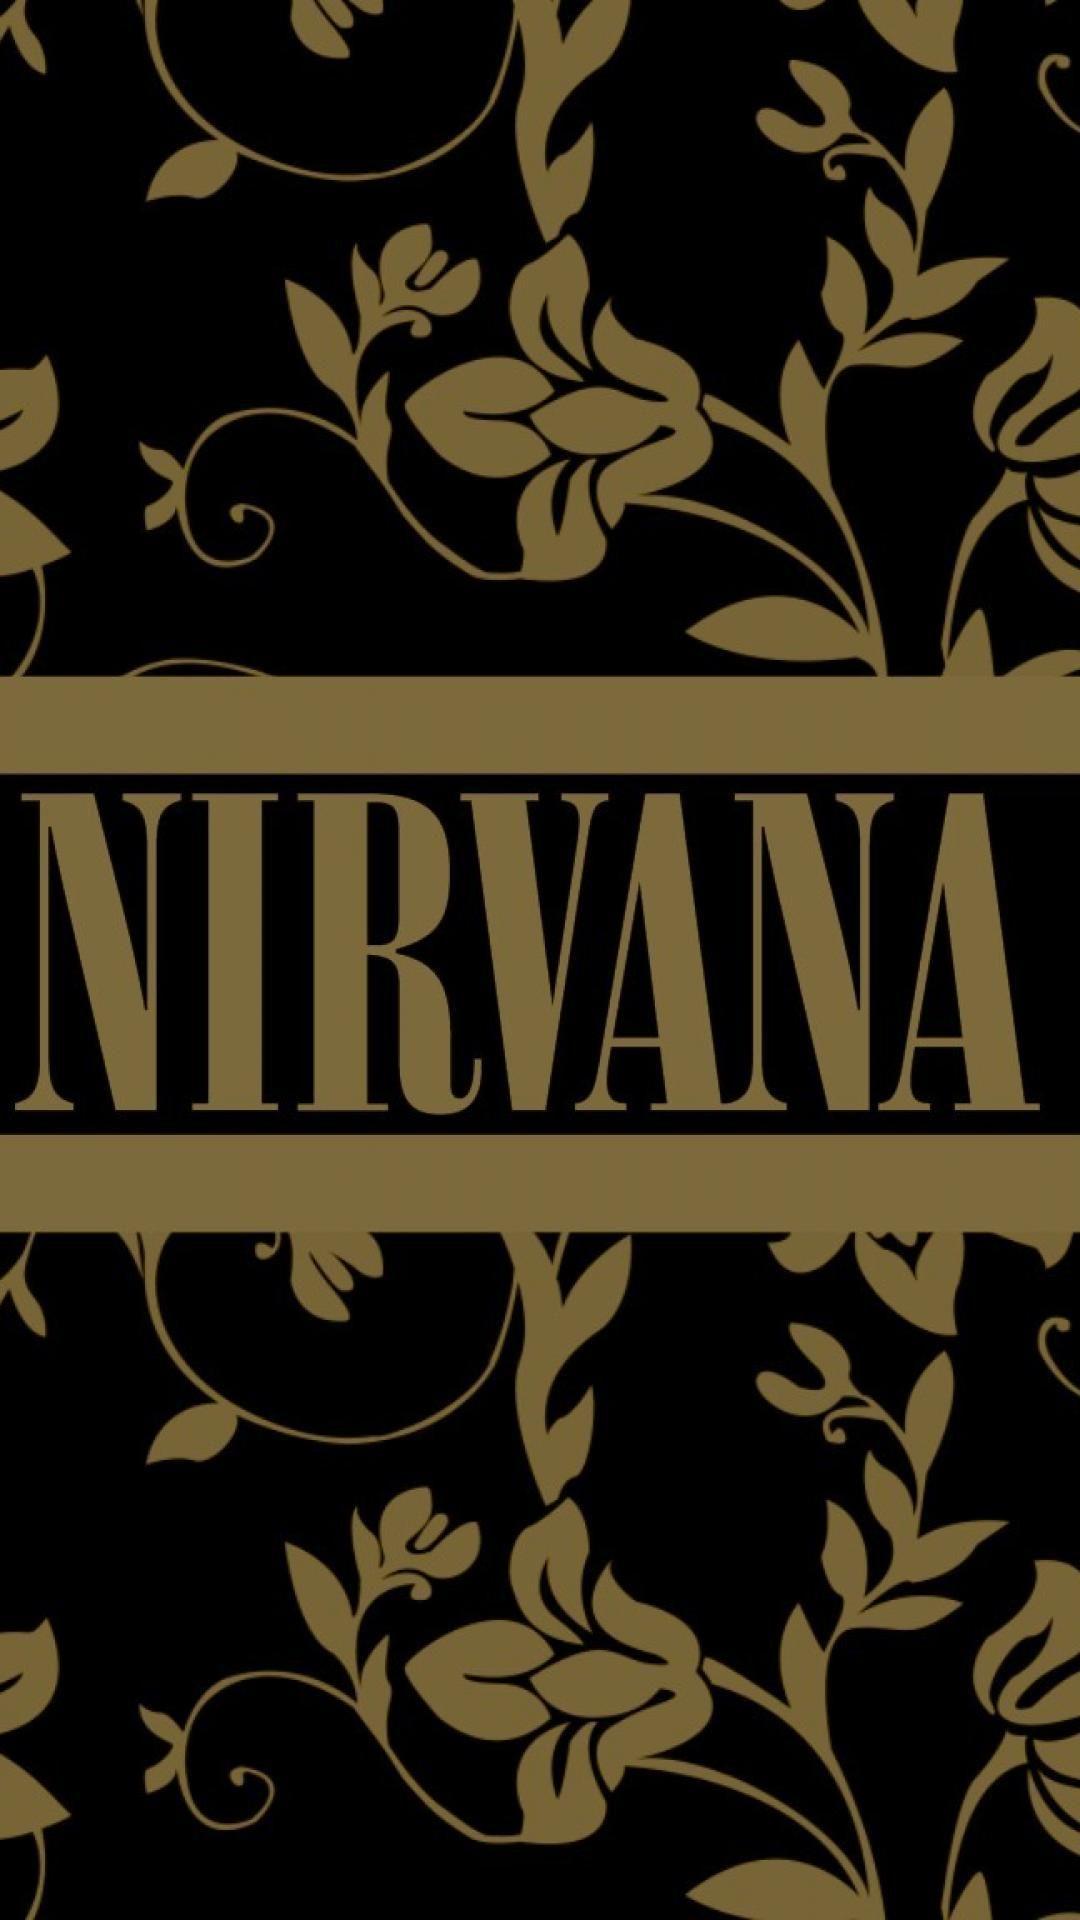 NIRVANA wallpaper. iPhone Wallpaper. Nirvana wallpaper, iPhone wallpaper music, Nirvana